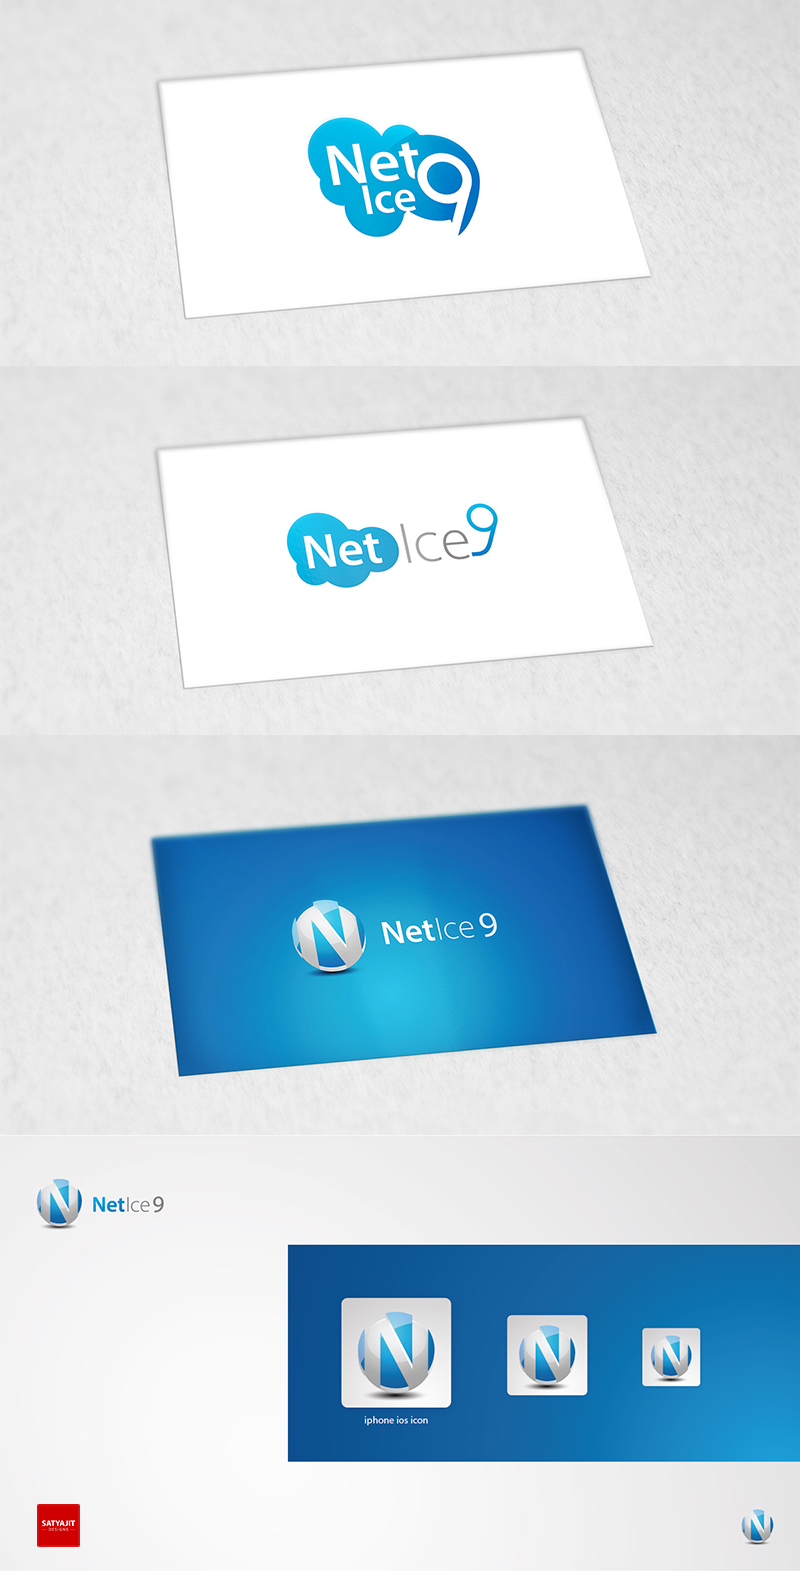 Net-ice-9-logodesign-satyajitdesign